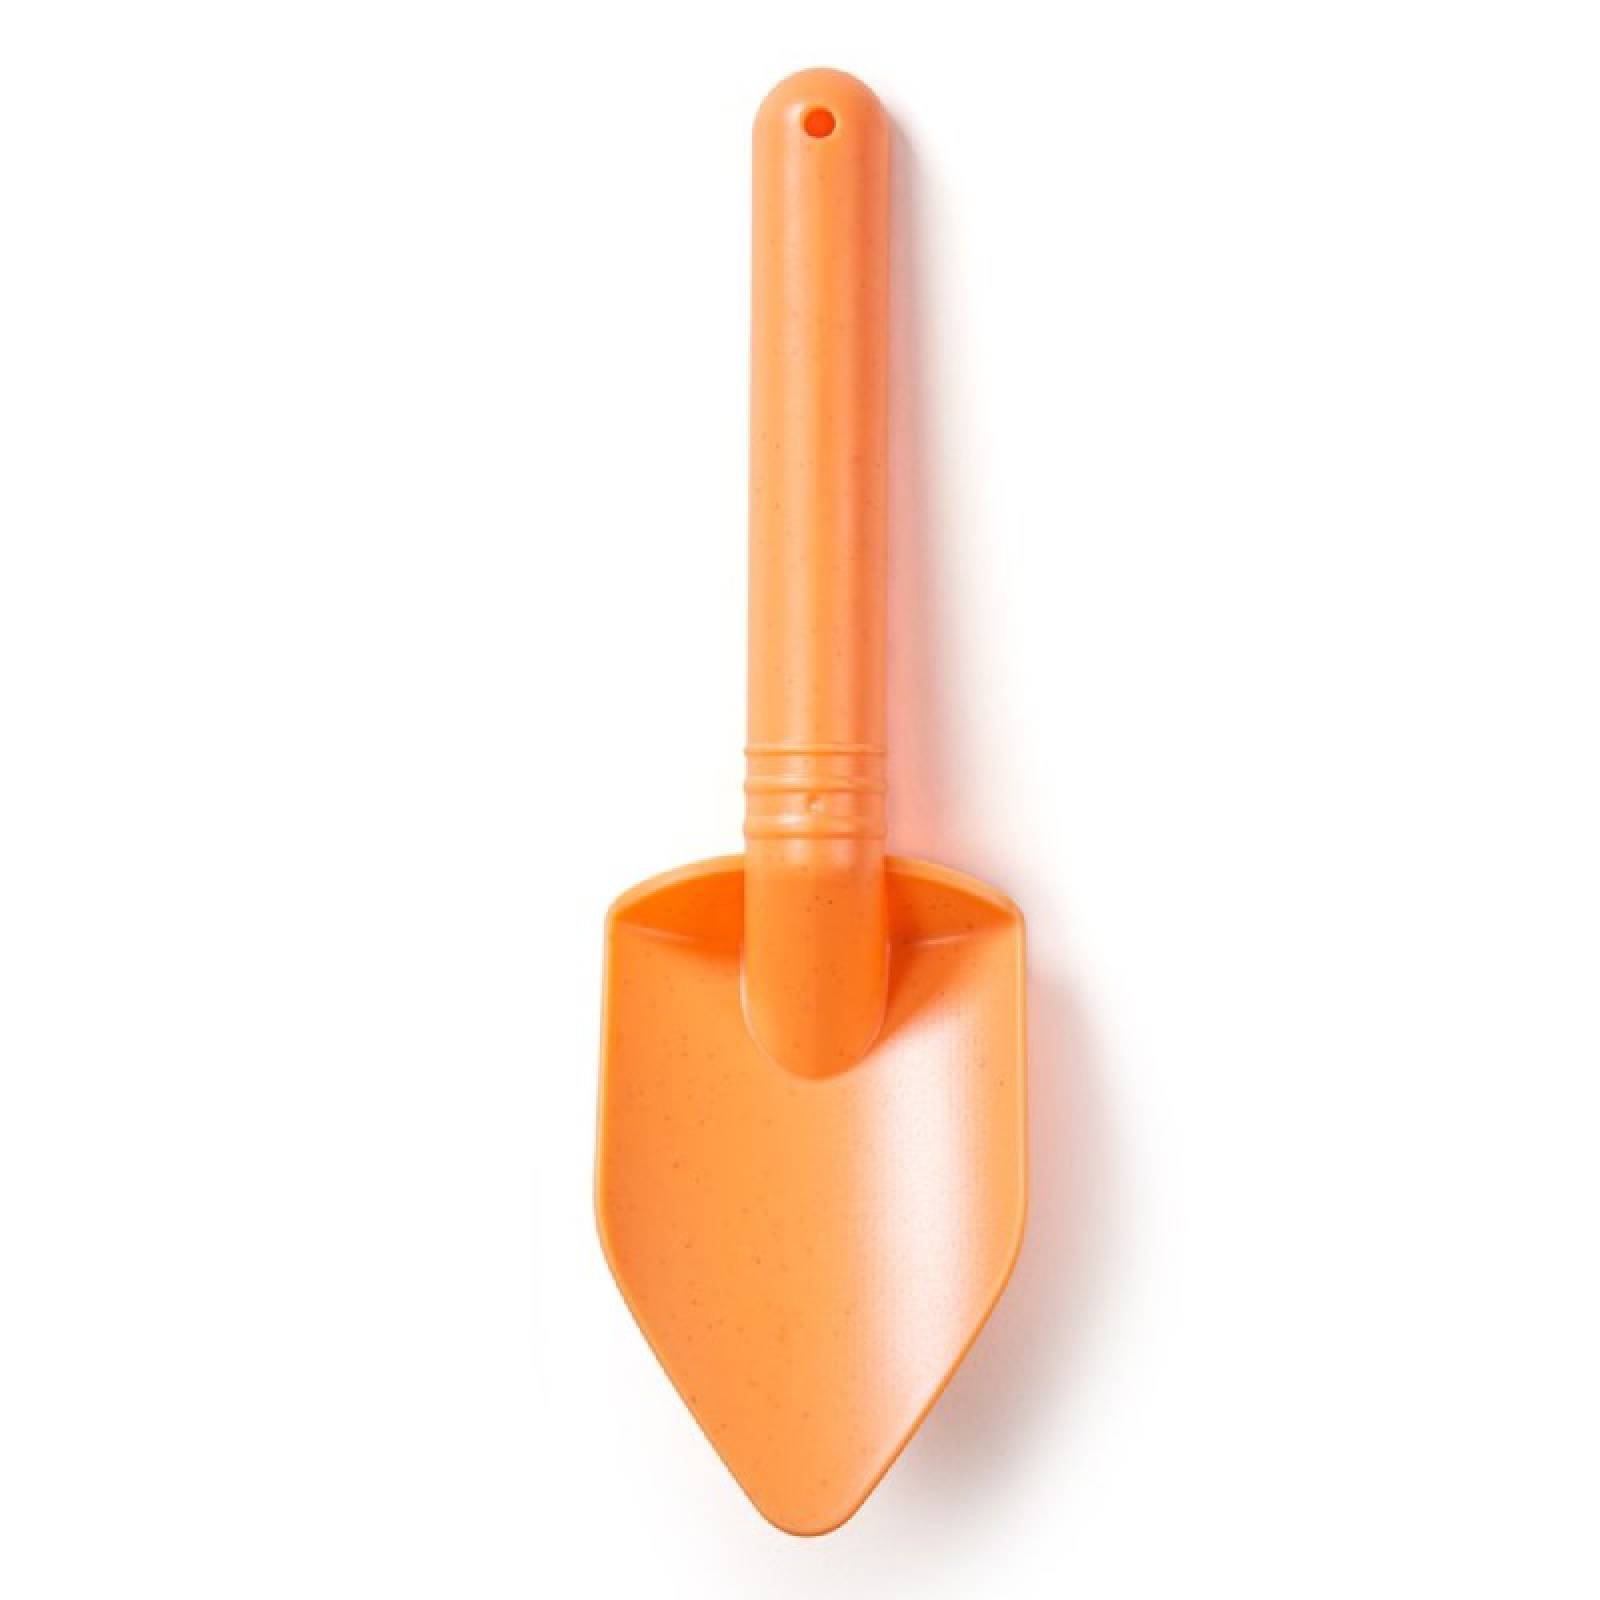 Toy Eco Spade In Apricot Orange 18m+